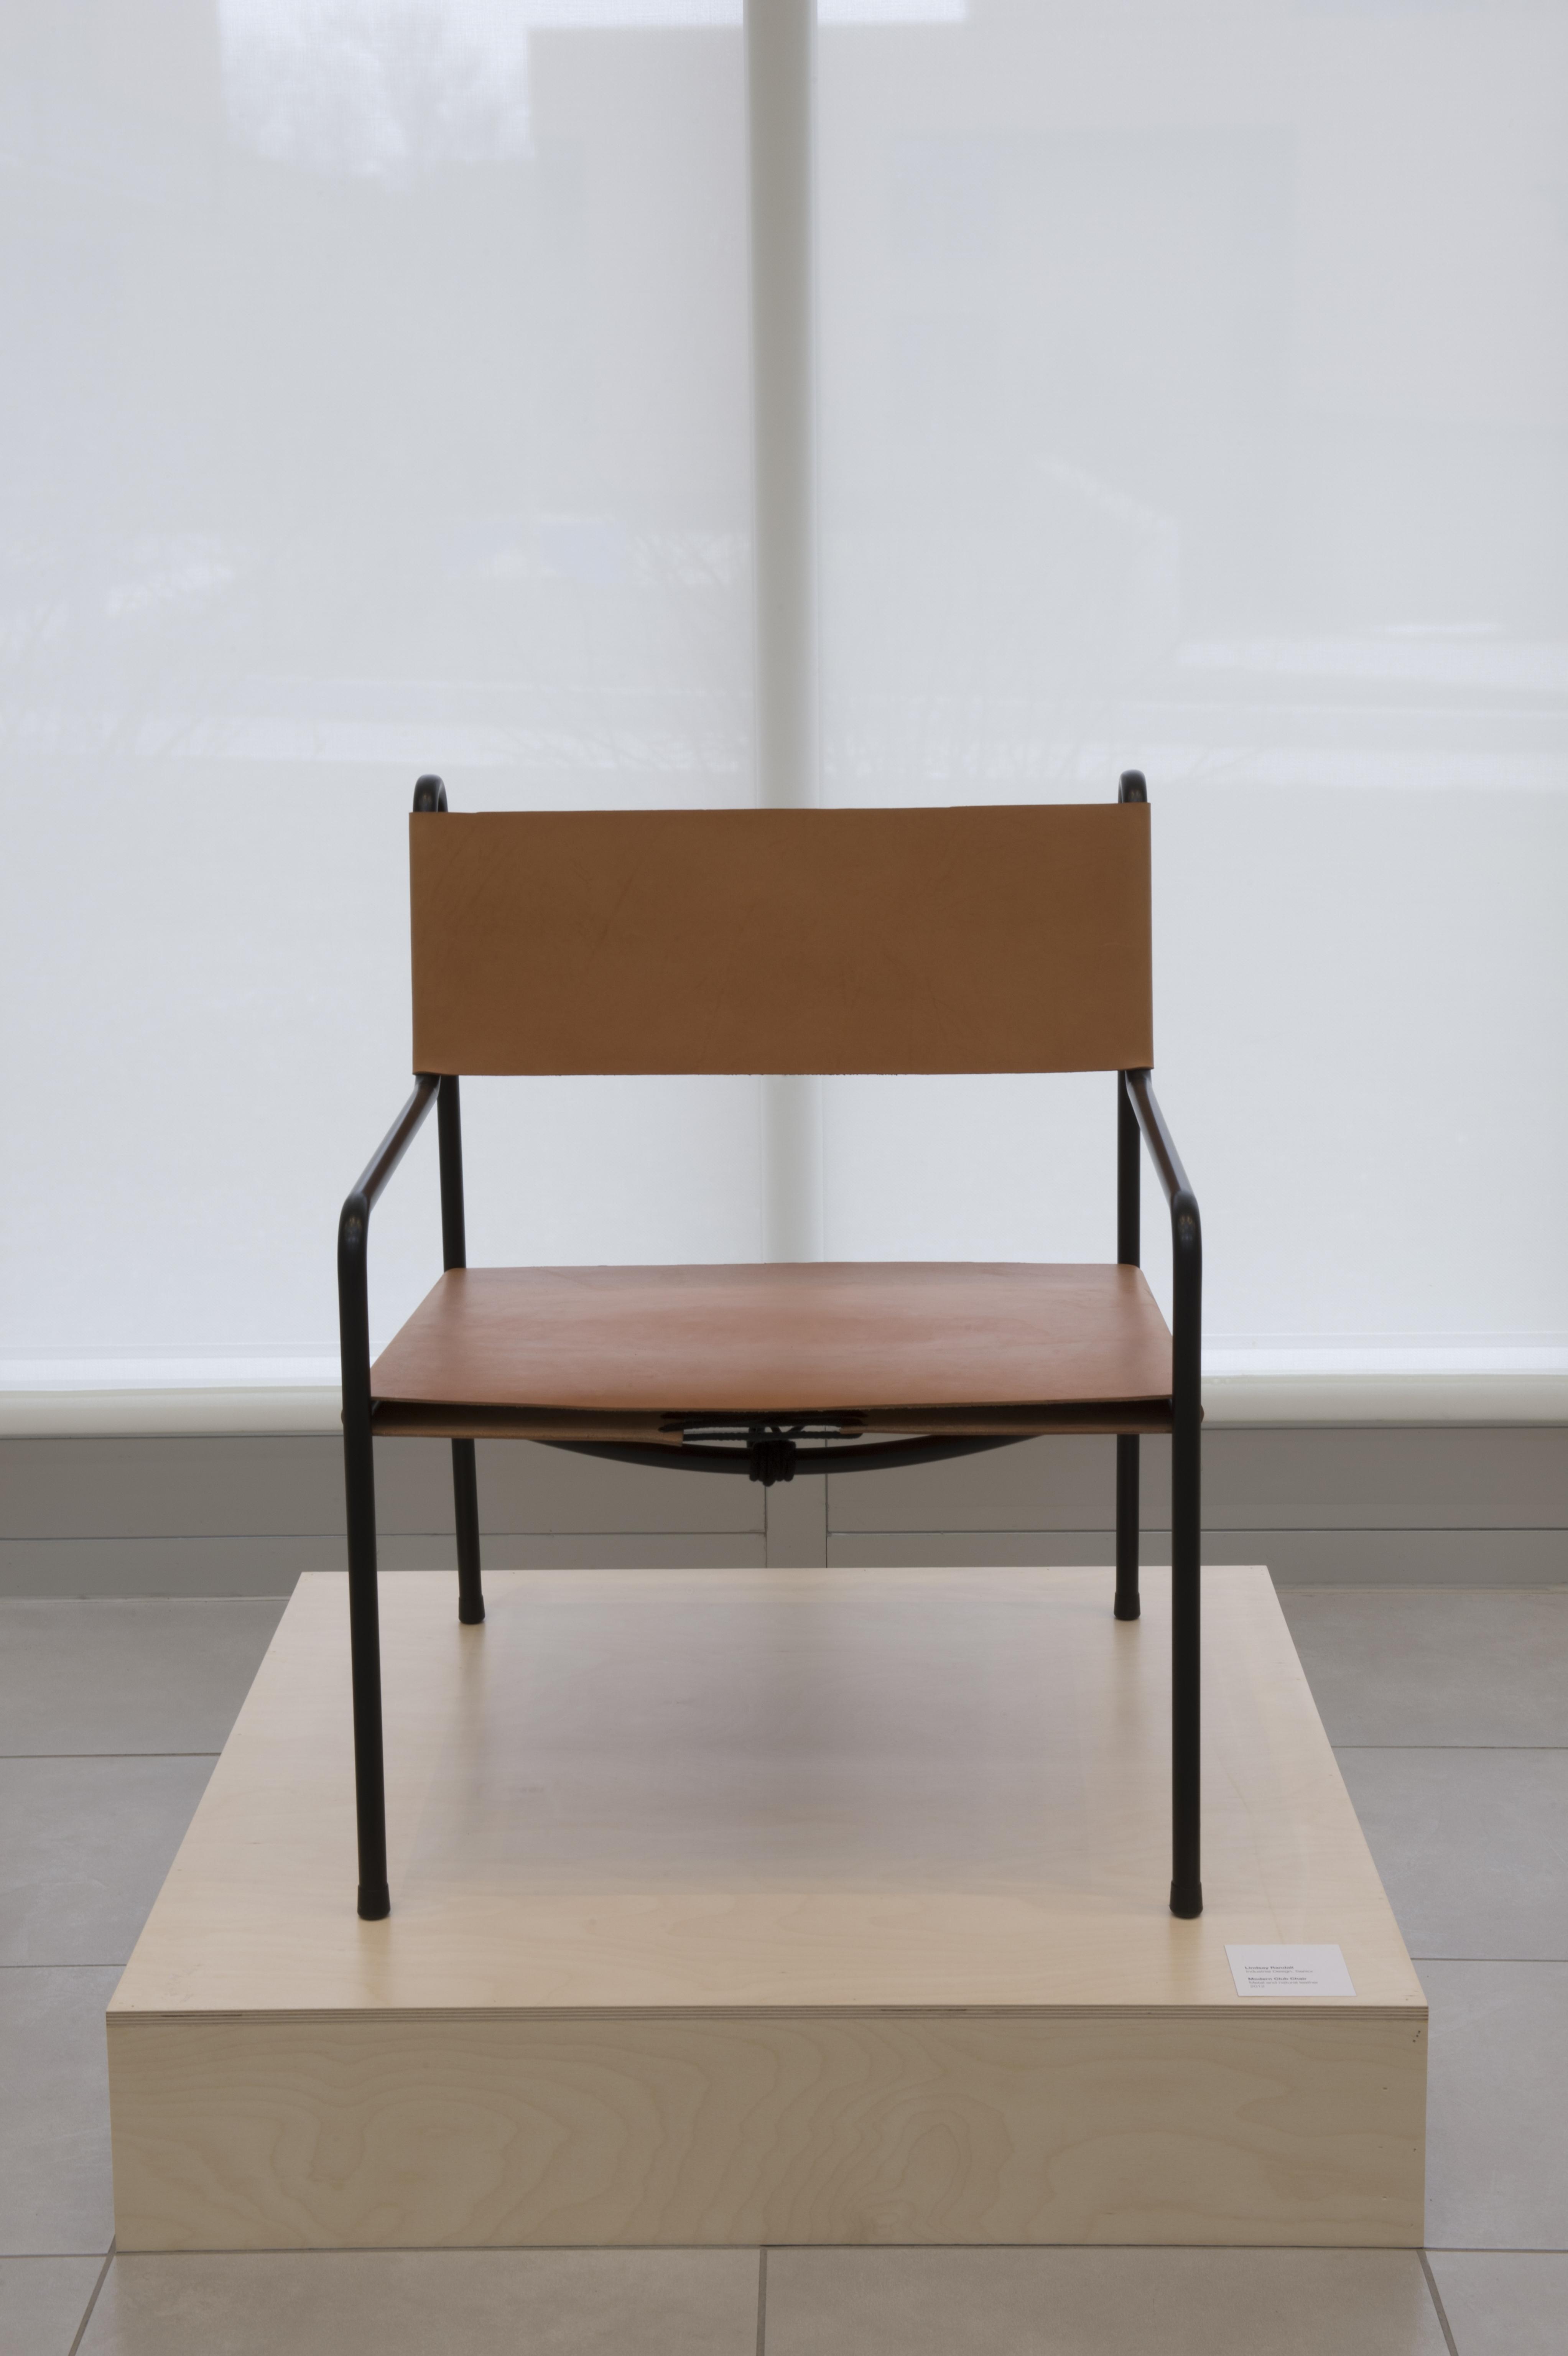 A dark wood chair on display in University Gallery.